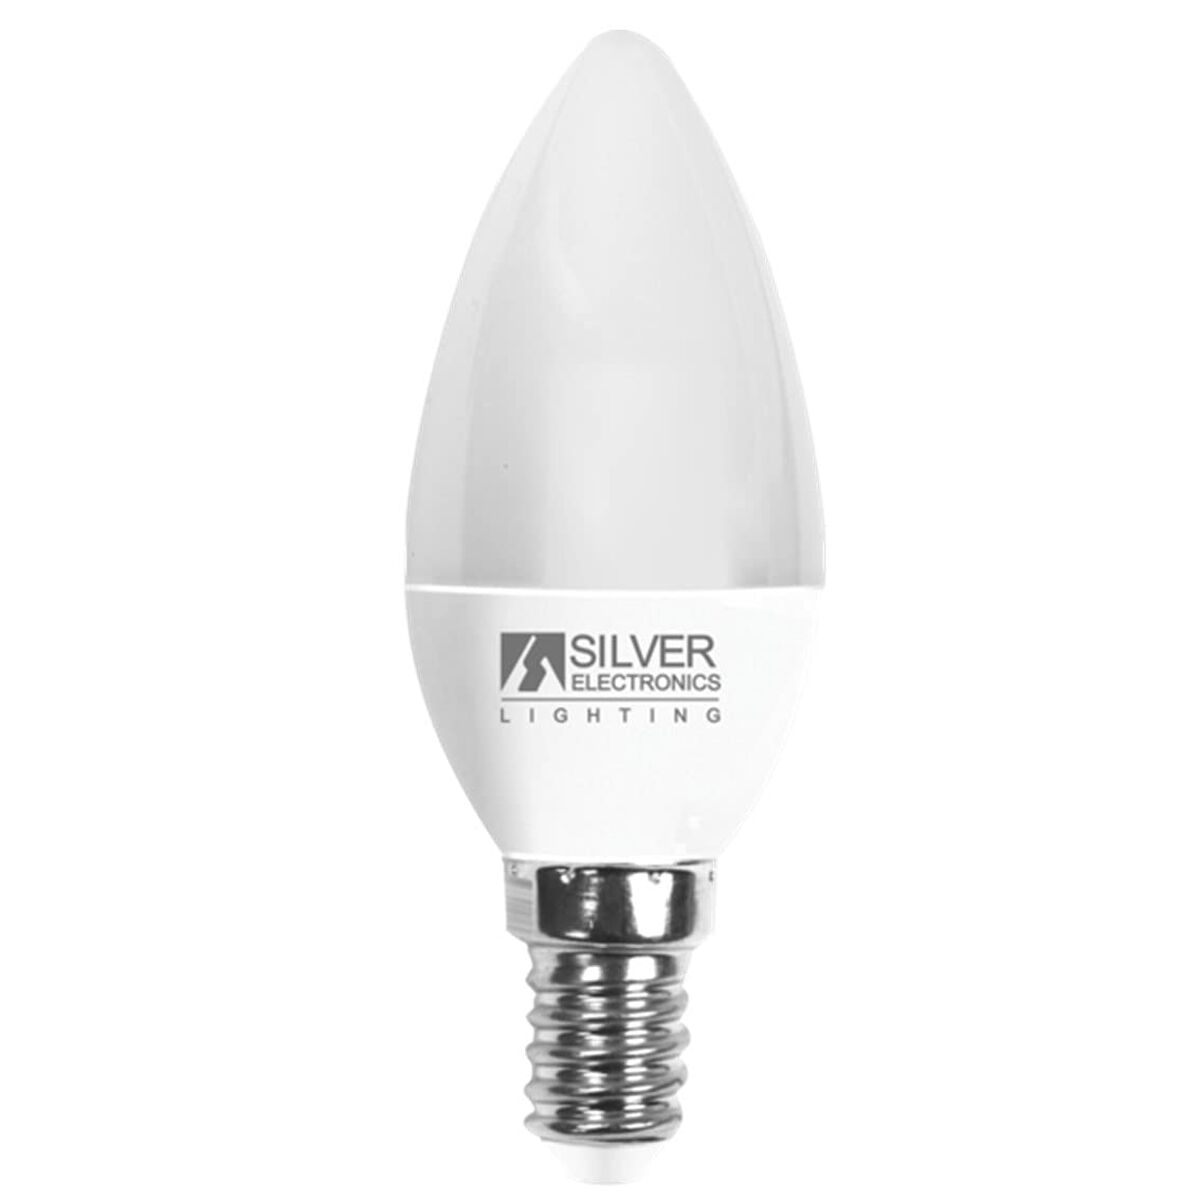 Lampe LED Silver Electronics 973614 6W 2700k E14